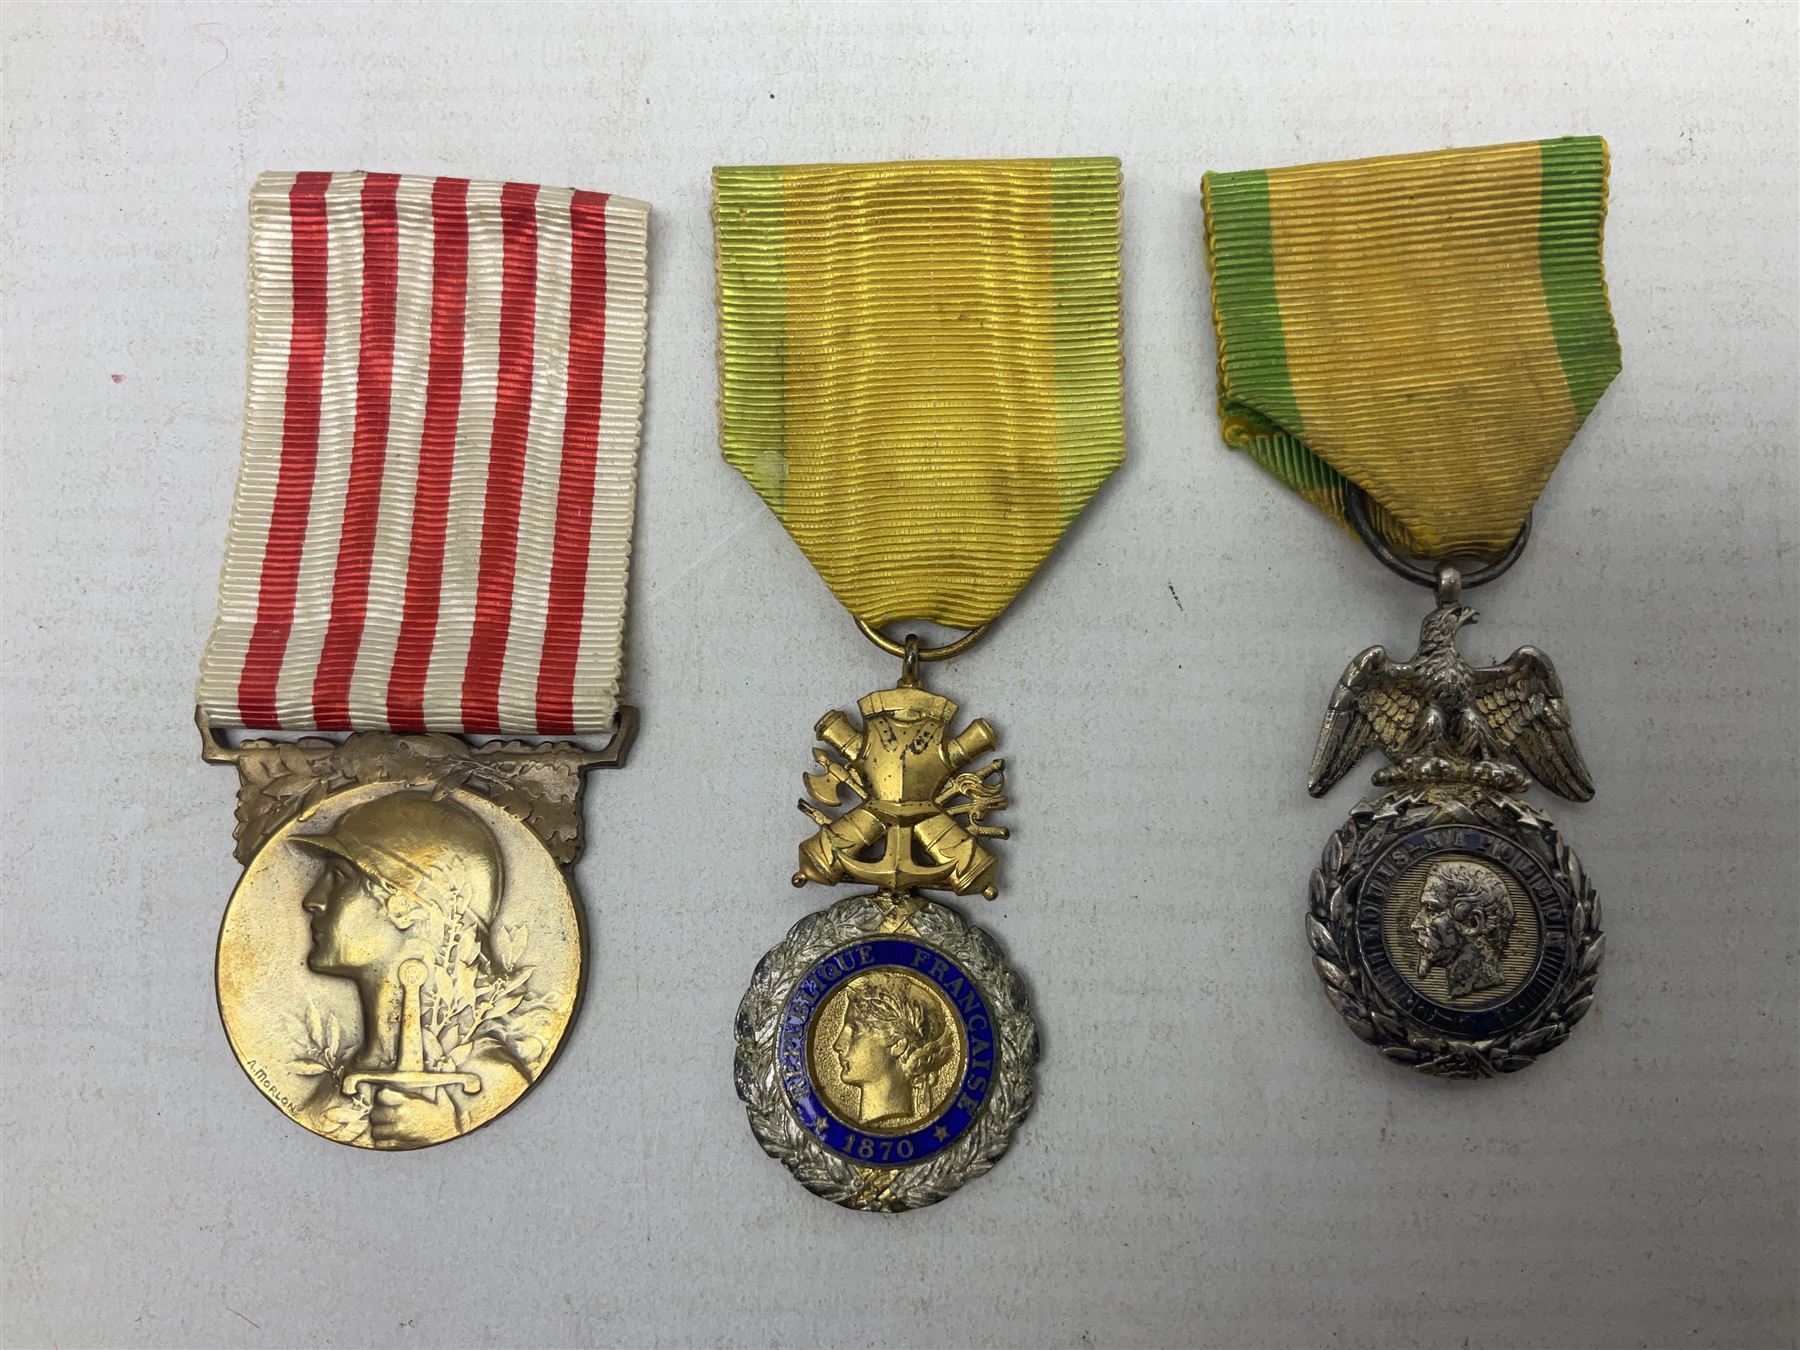 Six French medals - 2nd Empire Louis-Naploeon Medaille Militaire Valeur Et Discipline; 1870 3rd Repu - Image 7 of 10